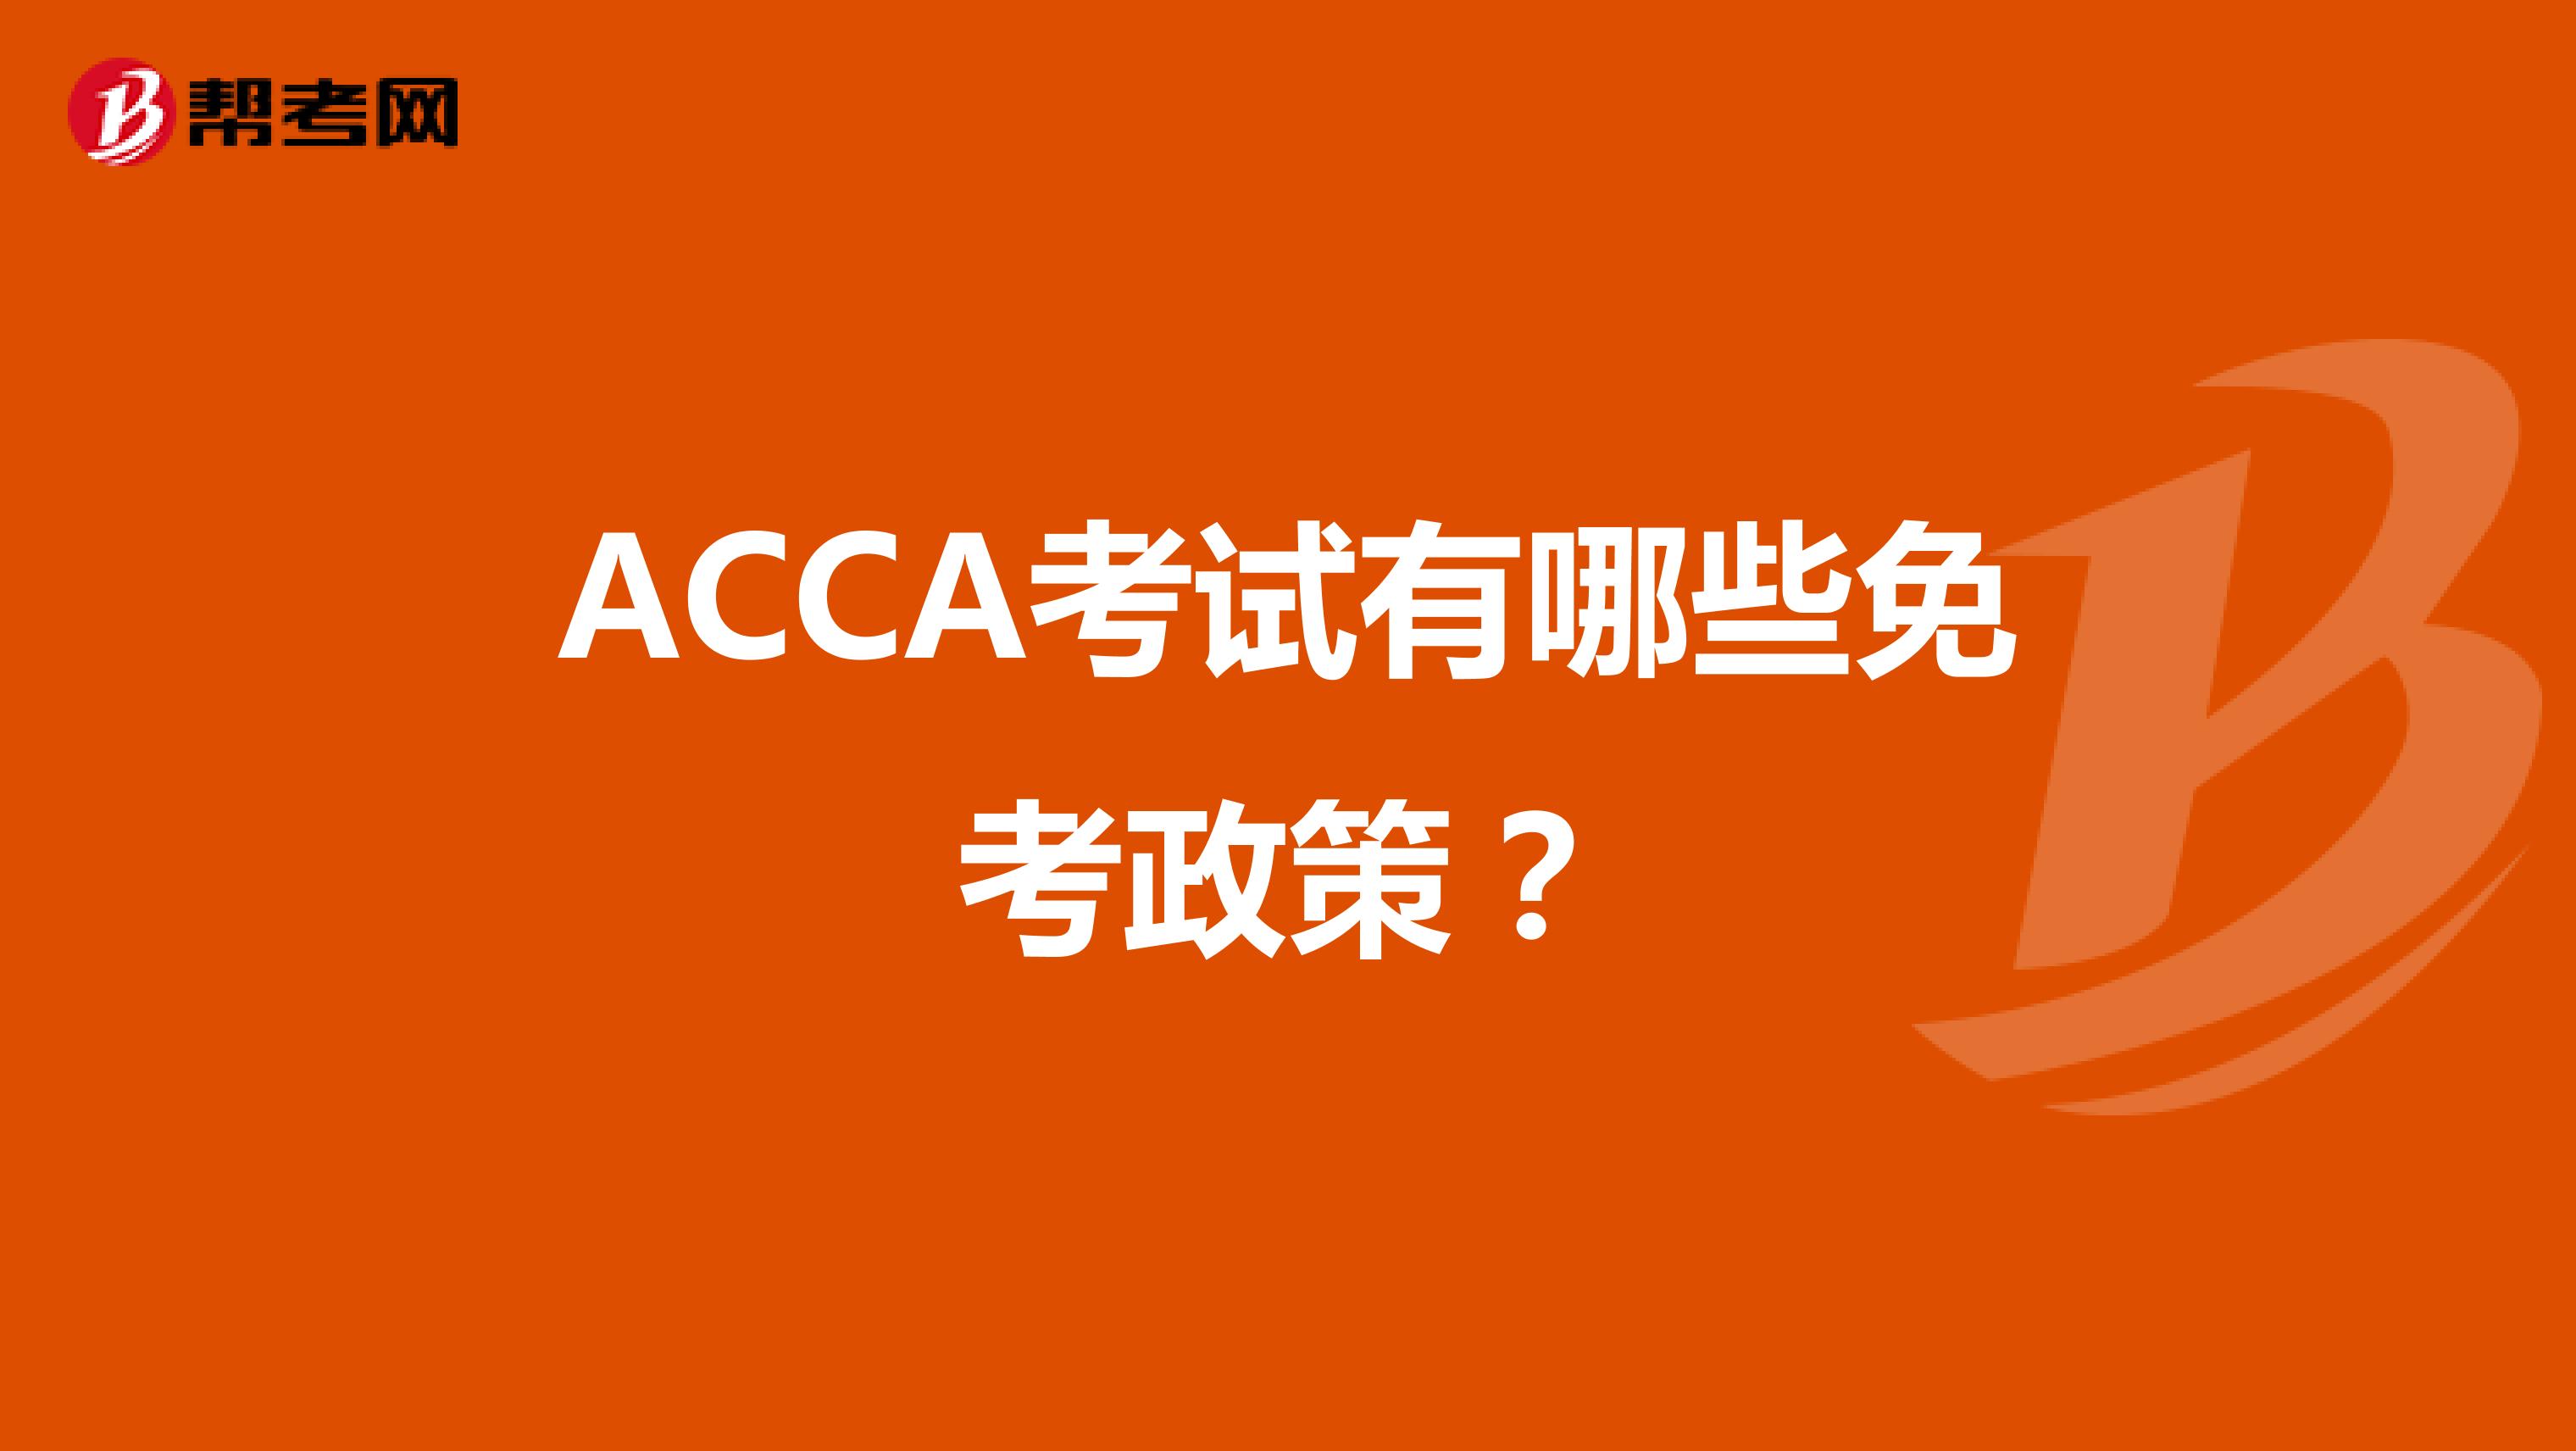 ACCA考试有哪些免考政策？